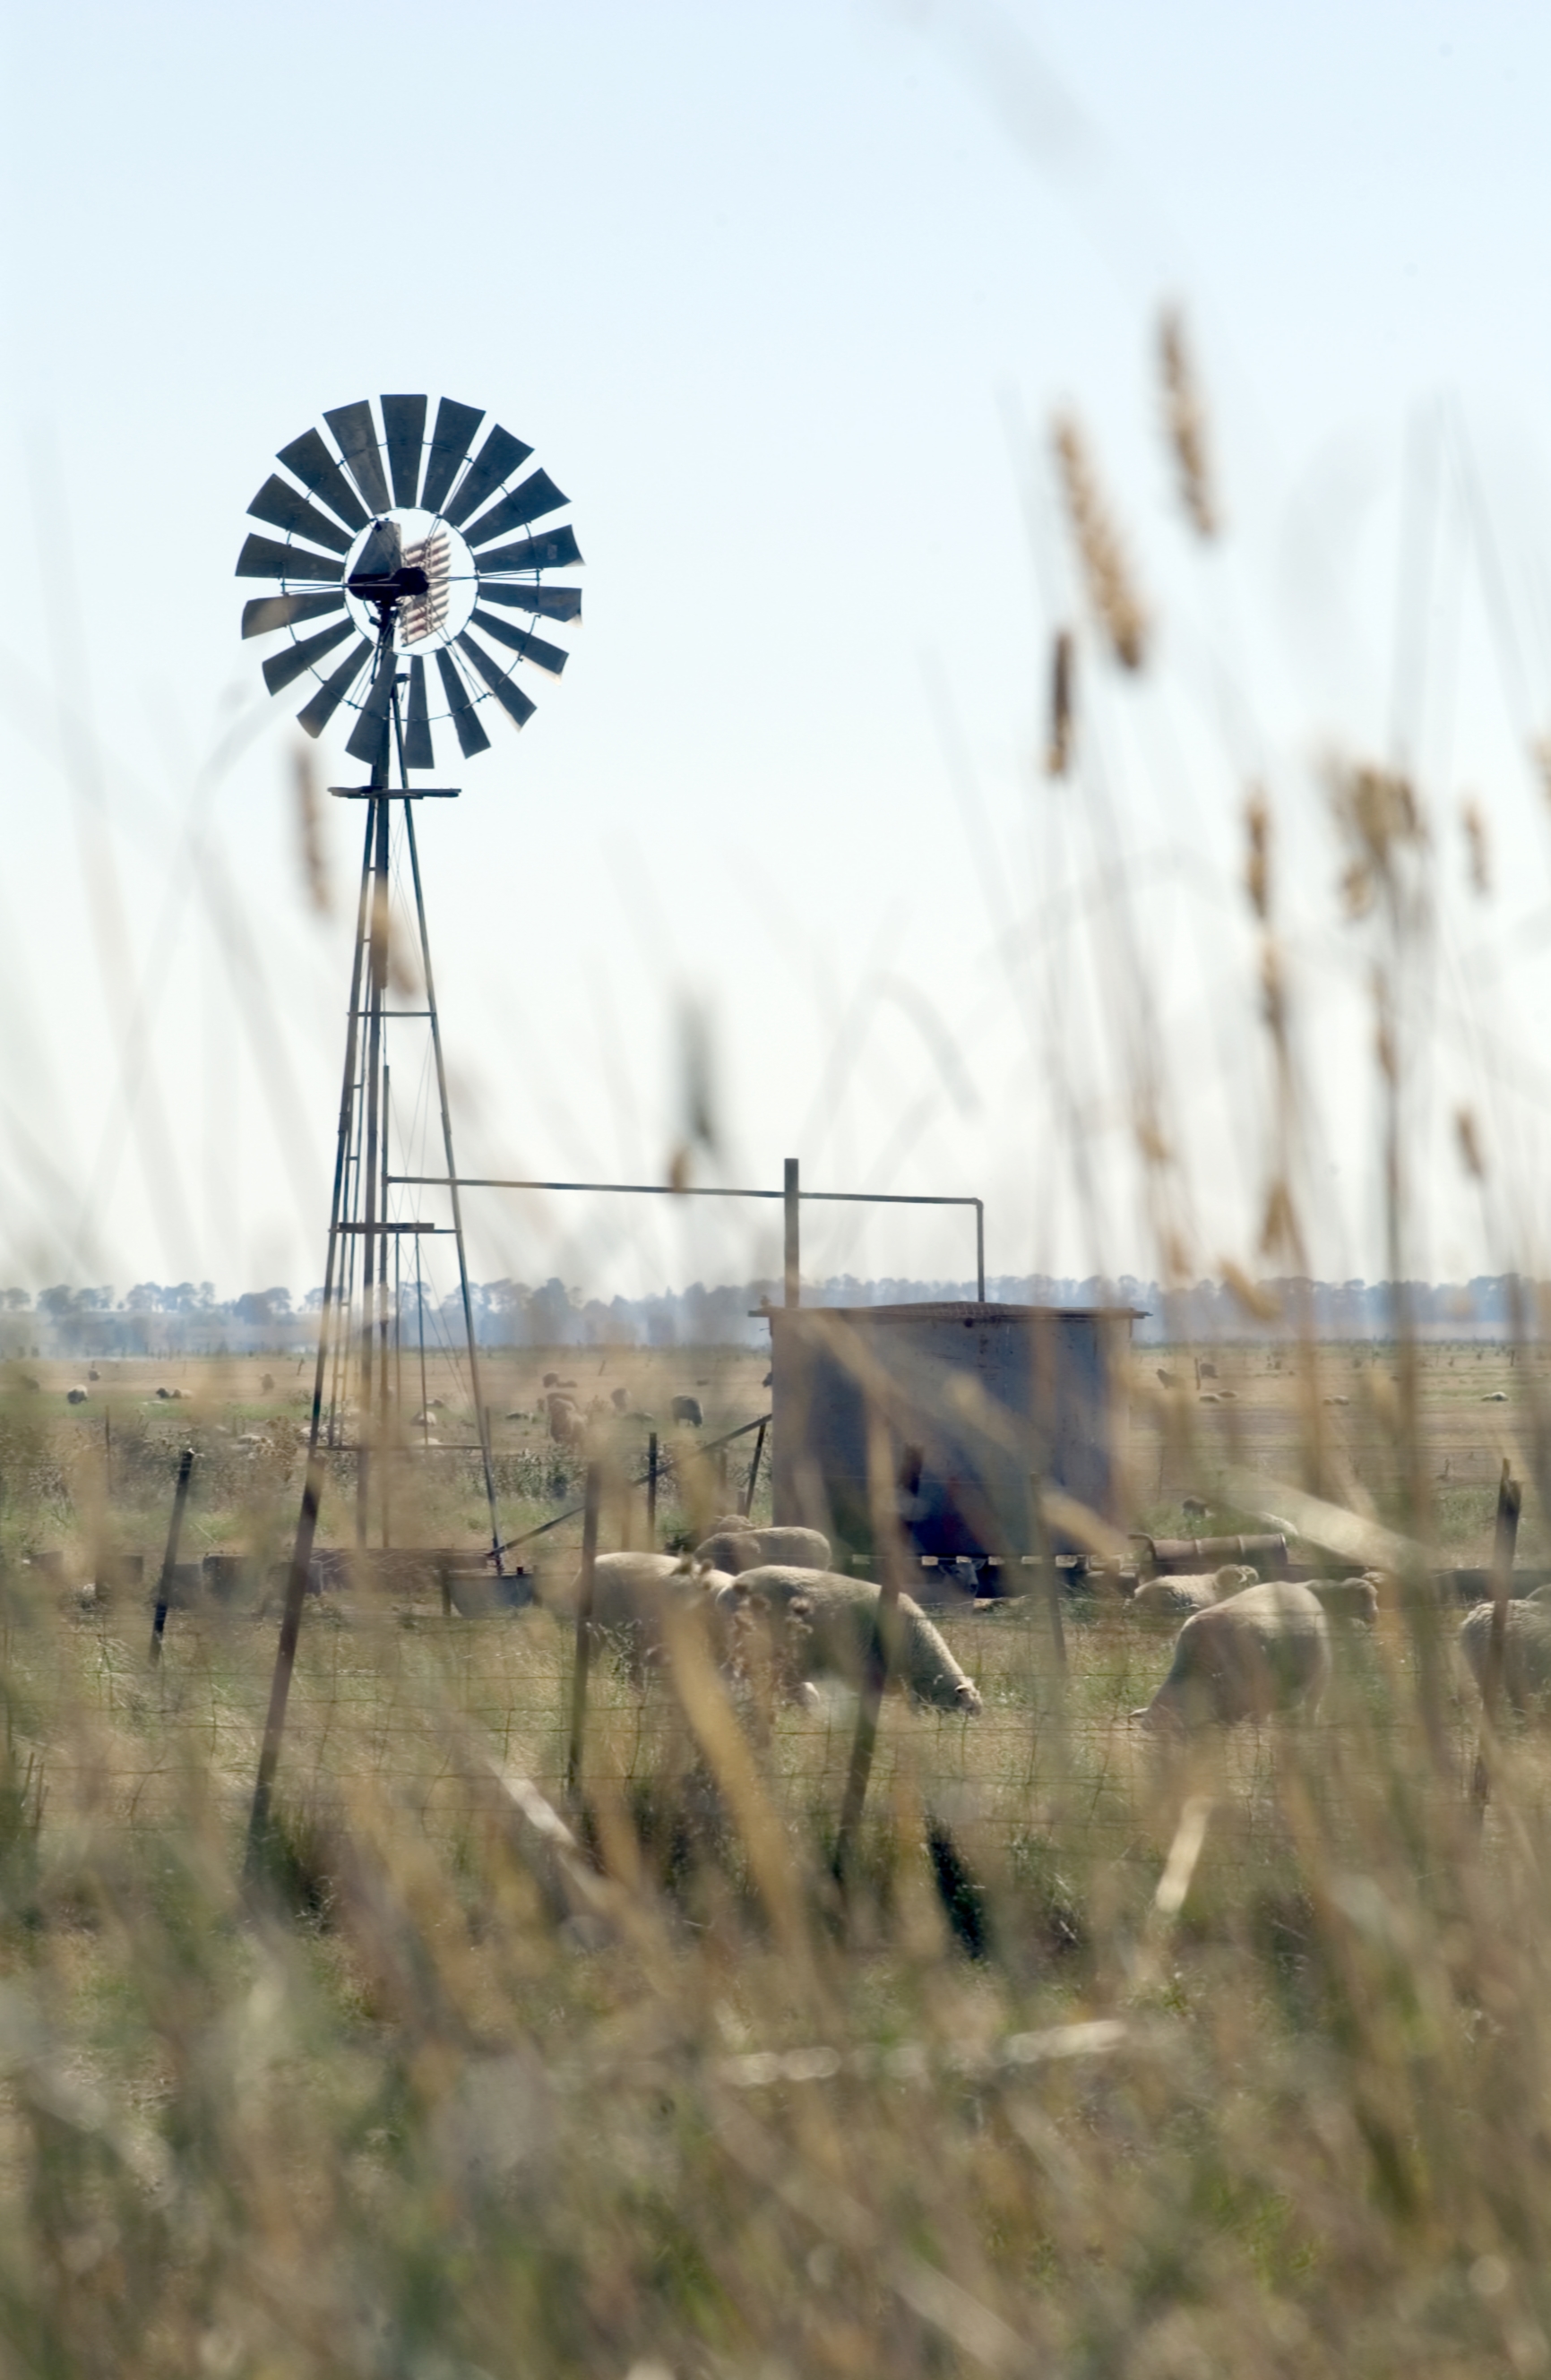 File:CSIRO ScienceImage 3387 Sheep farm with windmill.jpg ...